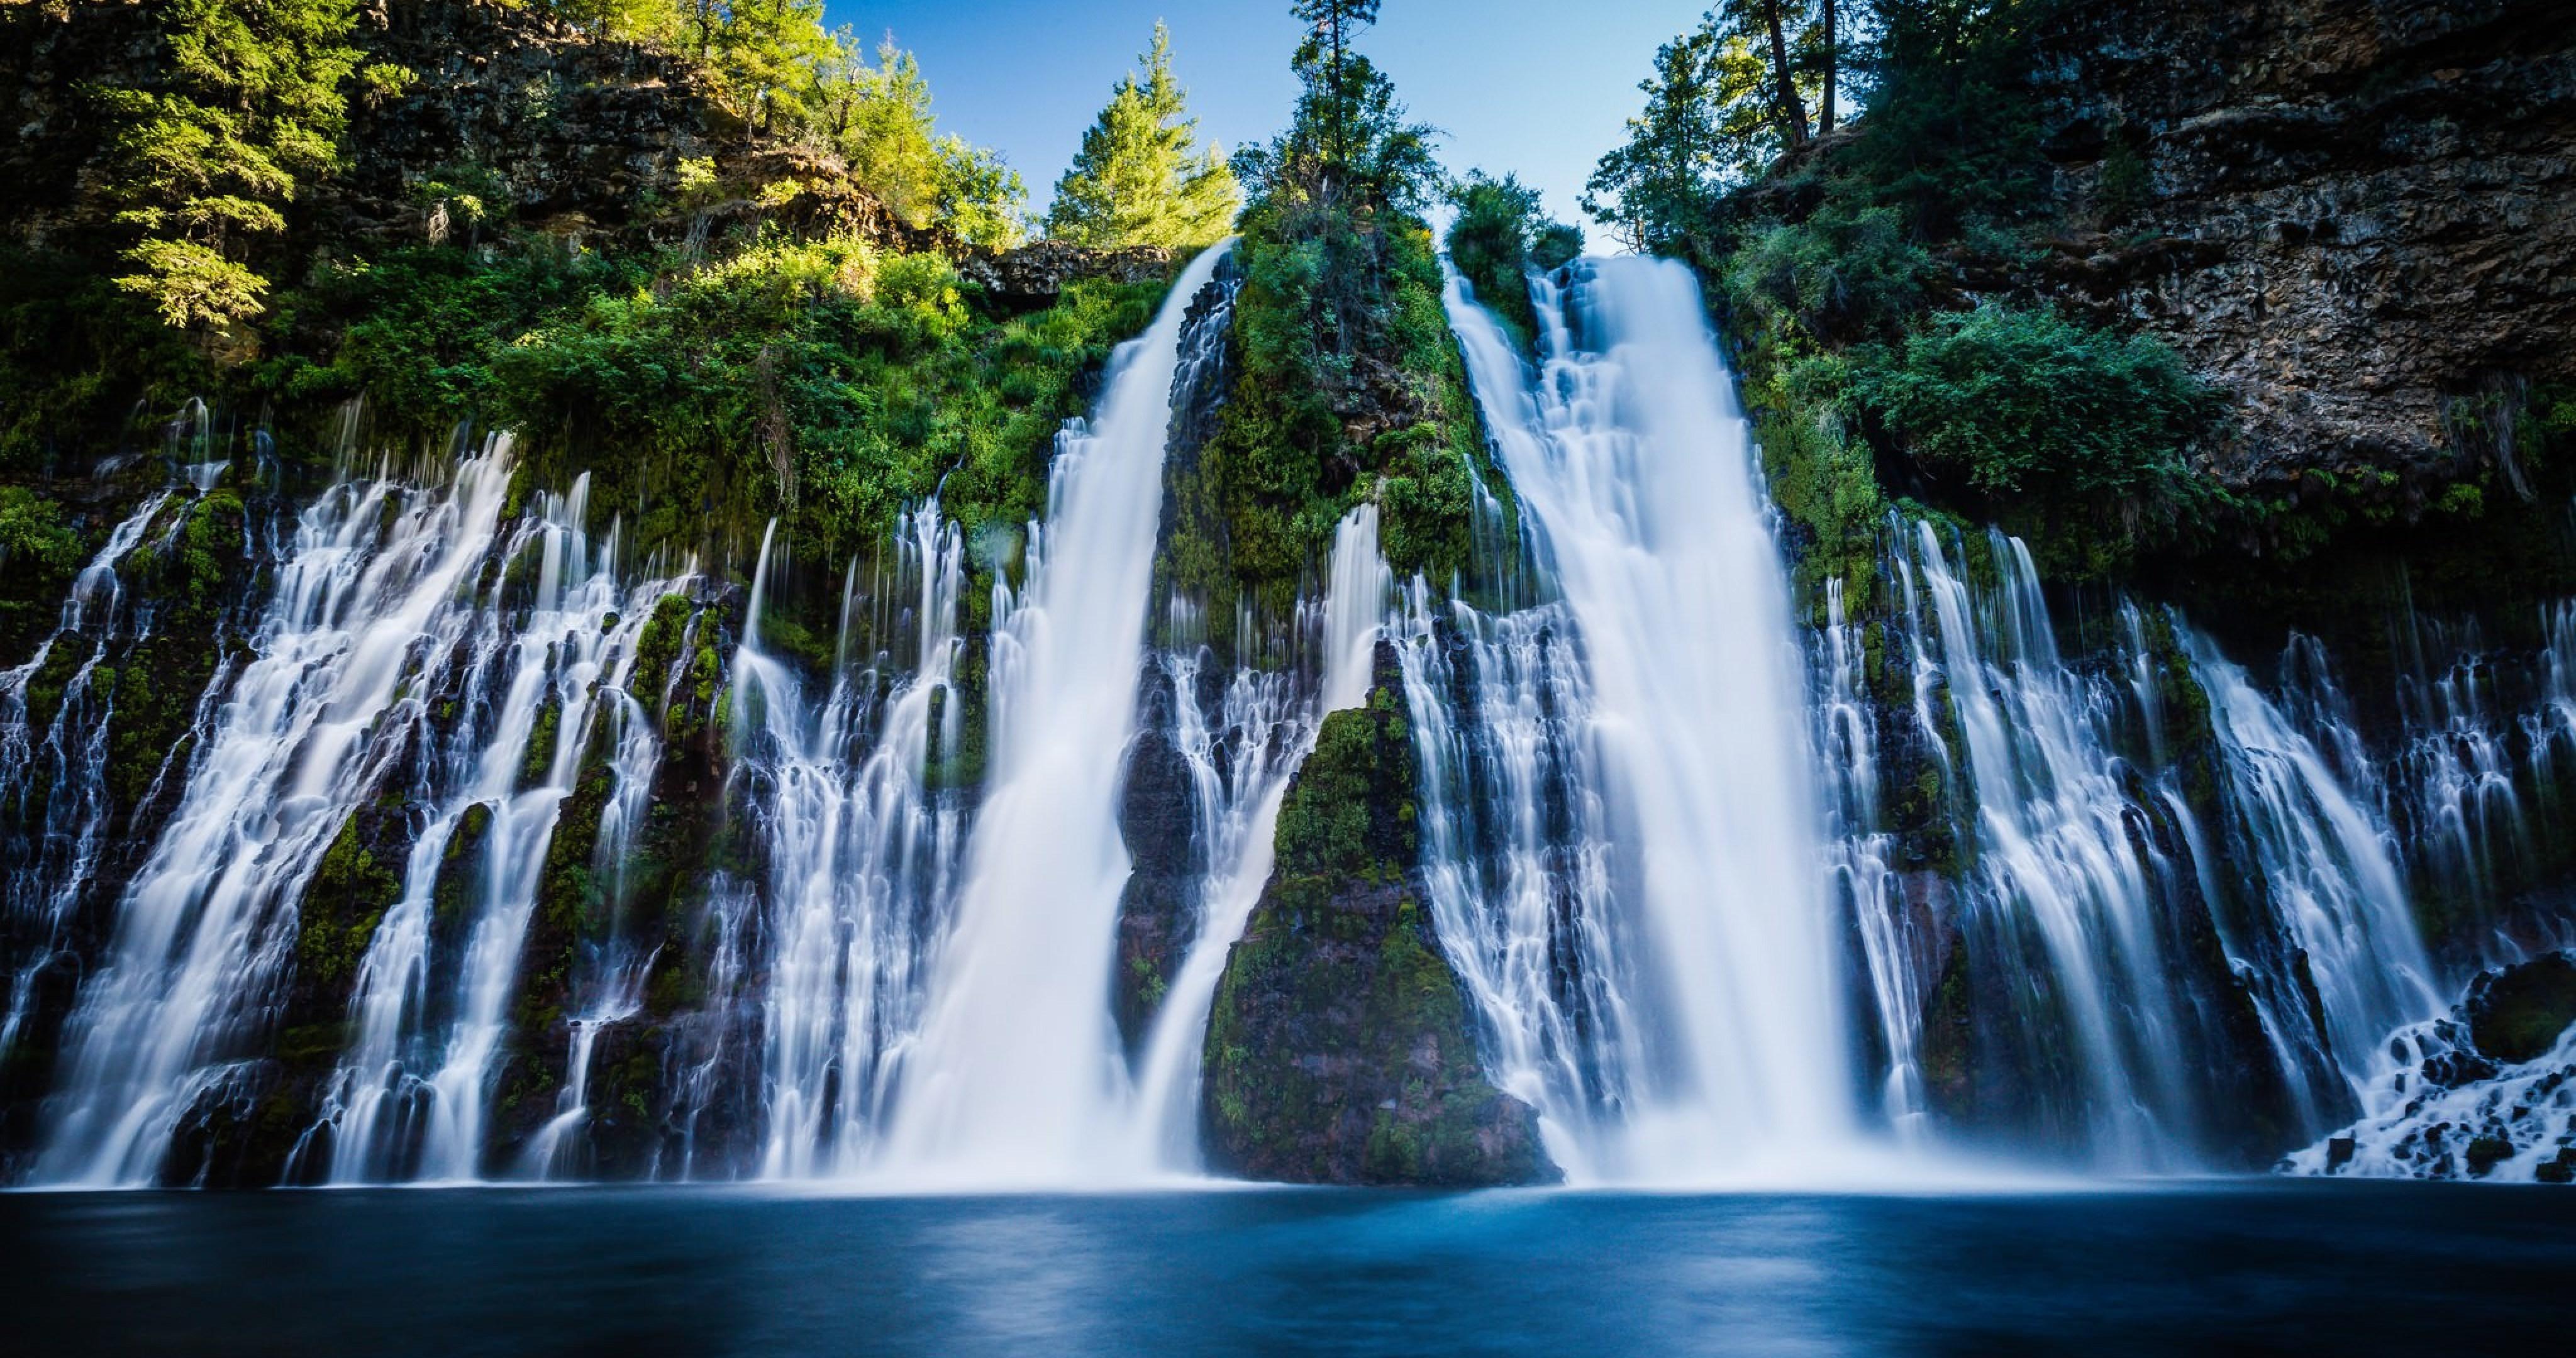 Картинки на телефон на заставку красивые живые. Водопад Аксас. Хайфорс водопад. Манзара водопад. Красота воды.